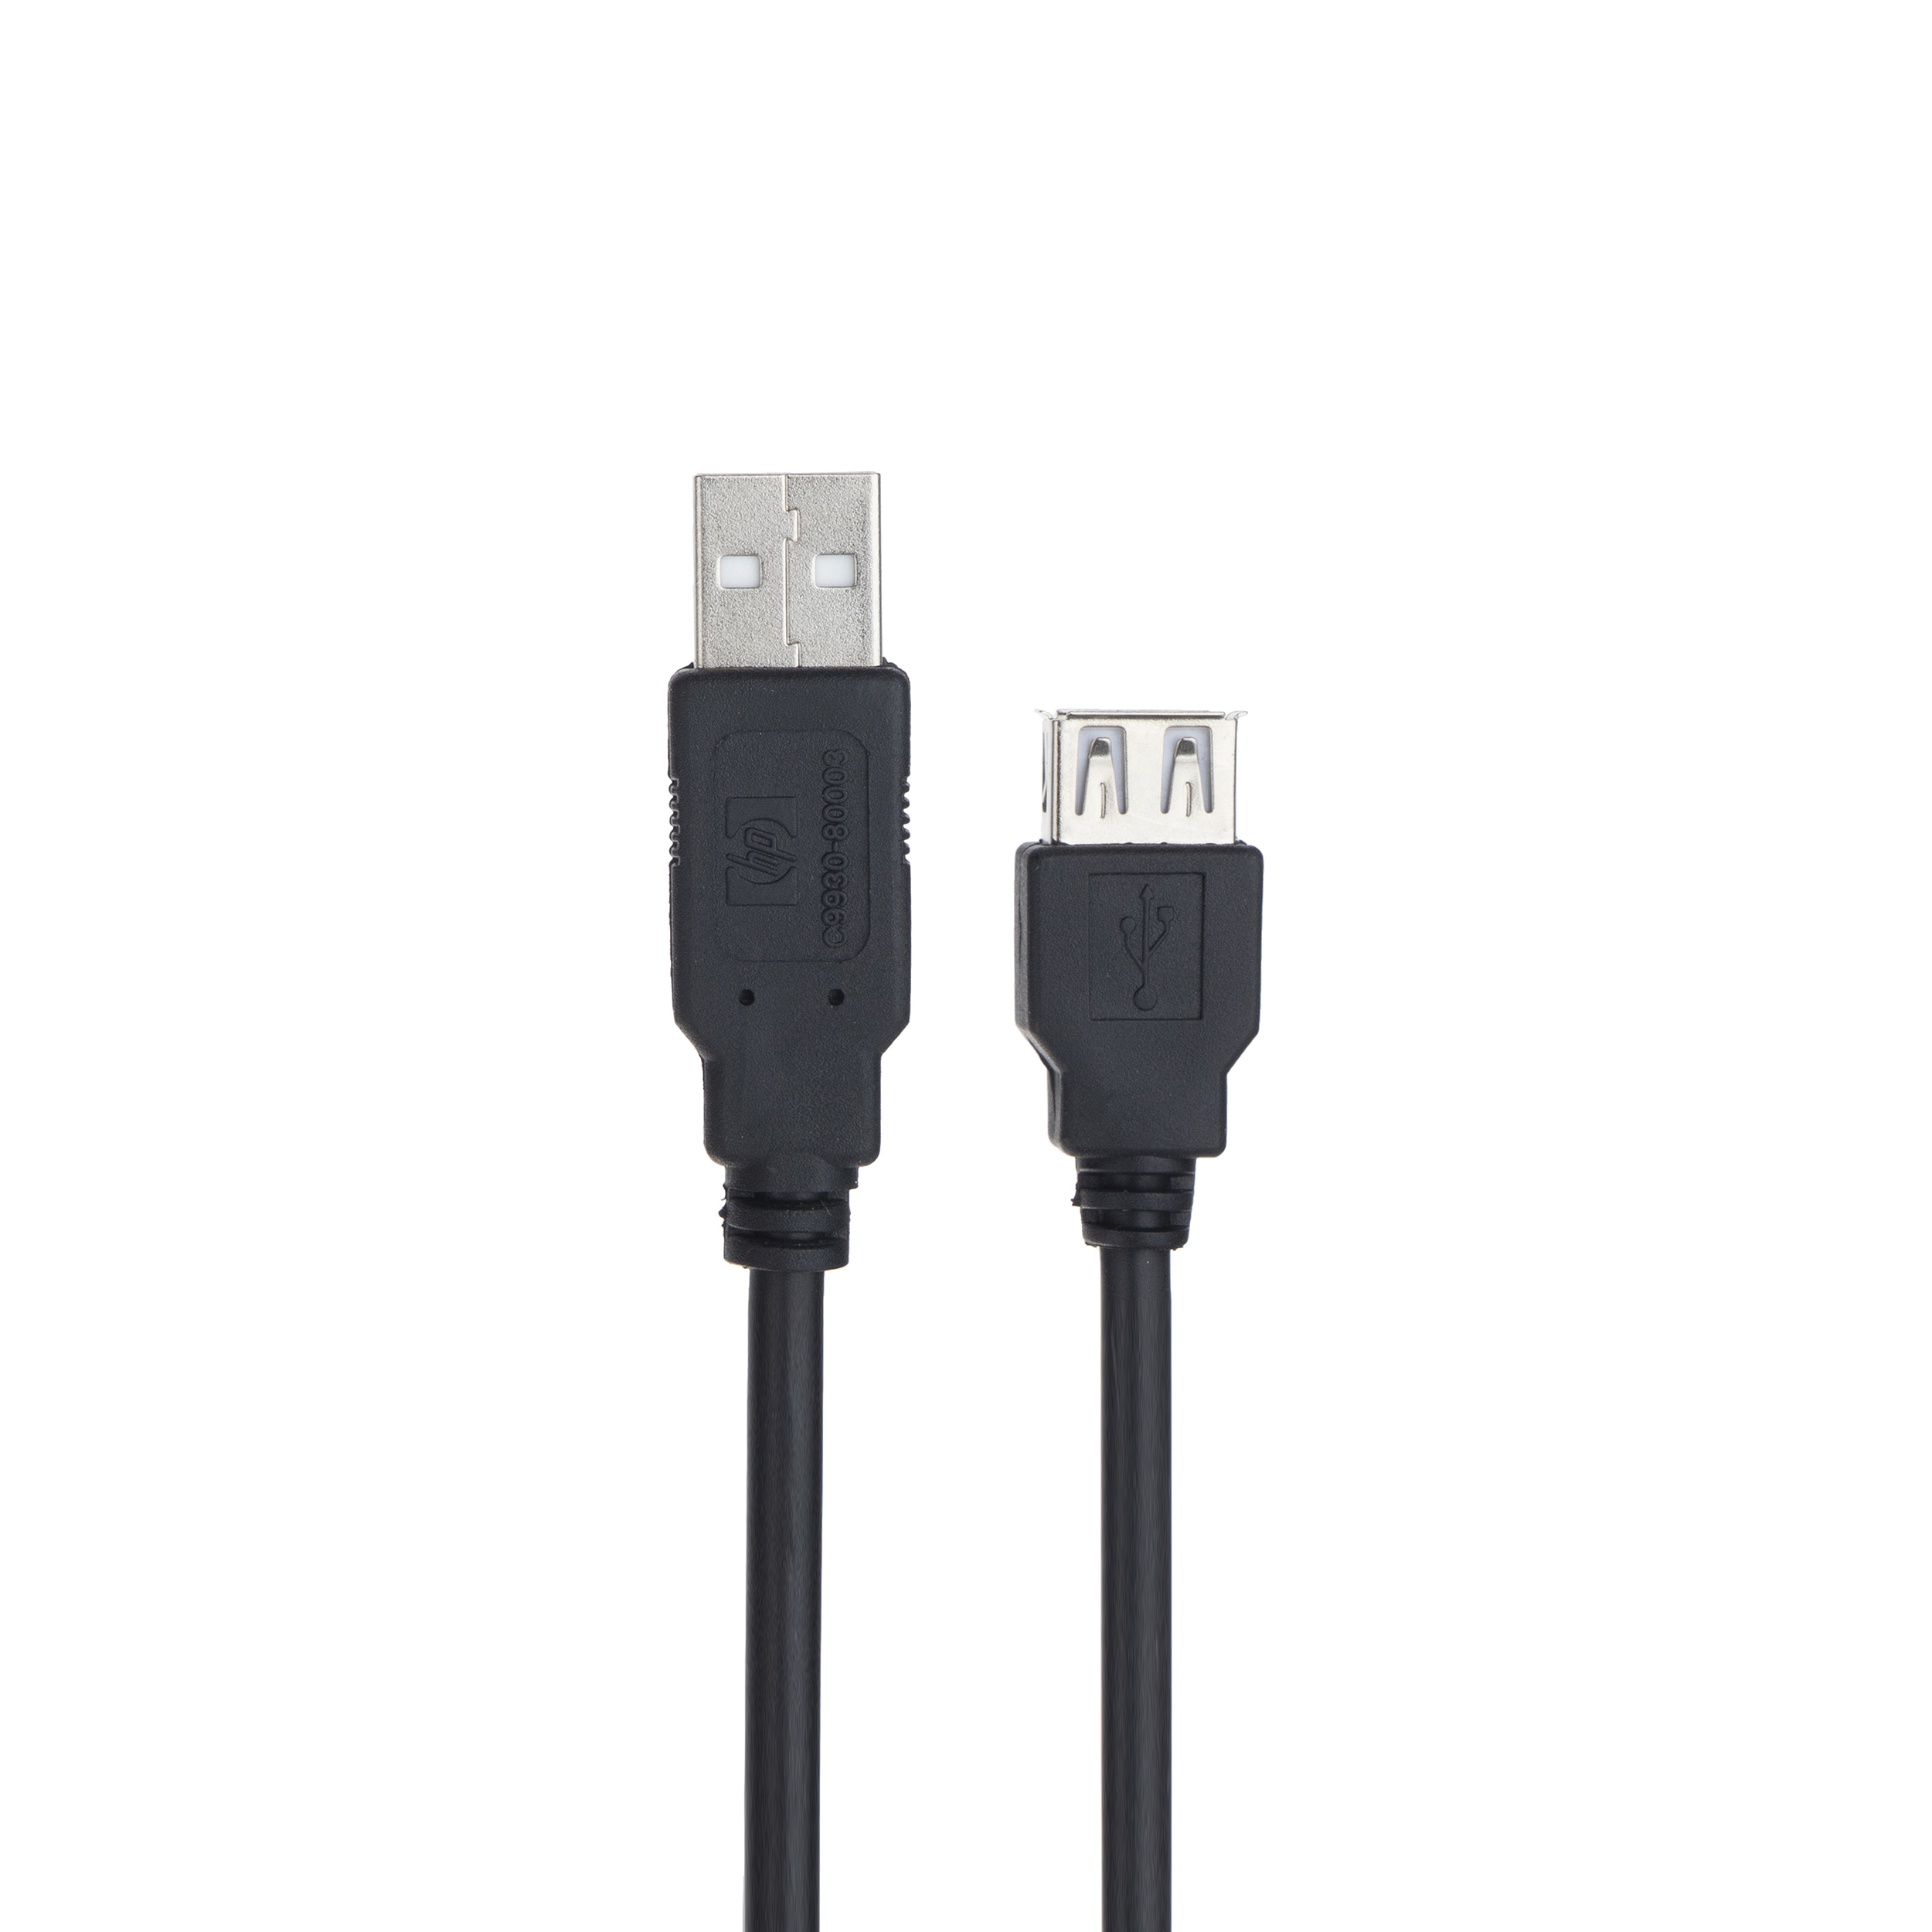 کابل افزایش طول USB 2.0 سویز کد 64 طول 5 متر